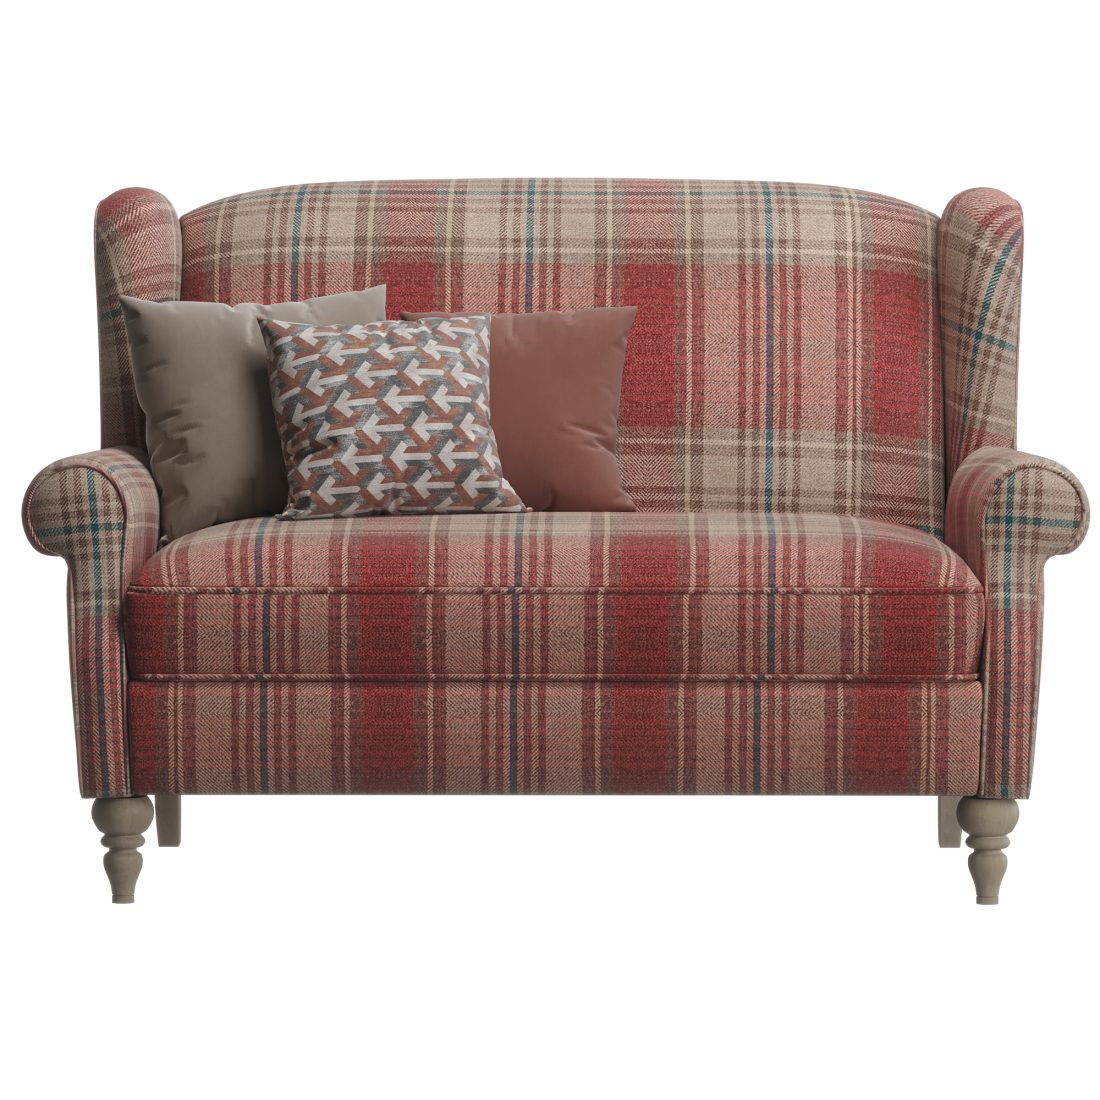 Sherlock Small Sofa With Light Legs